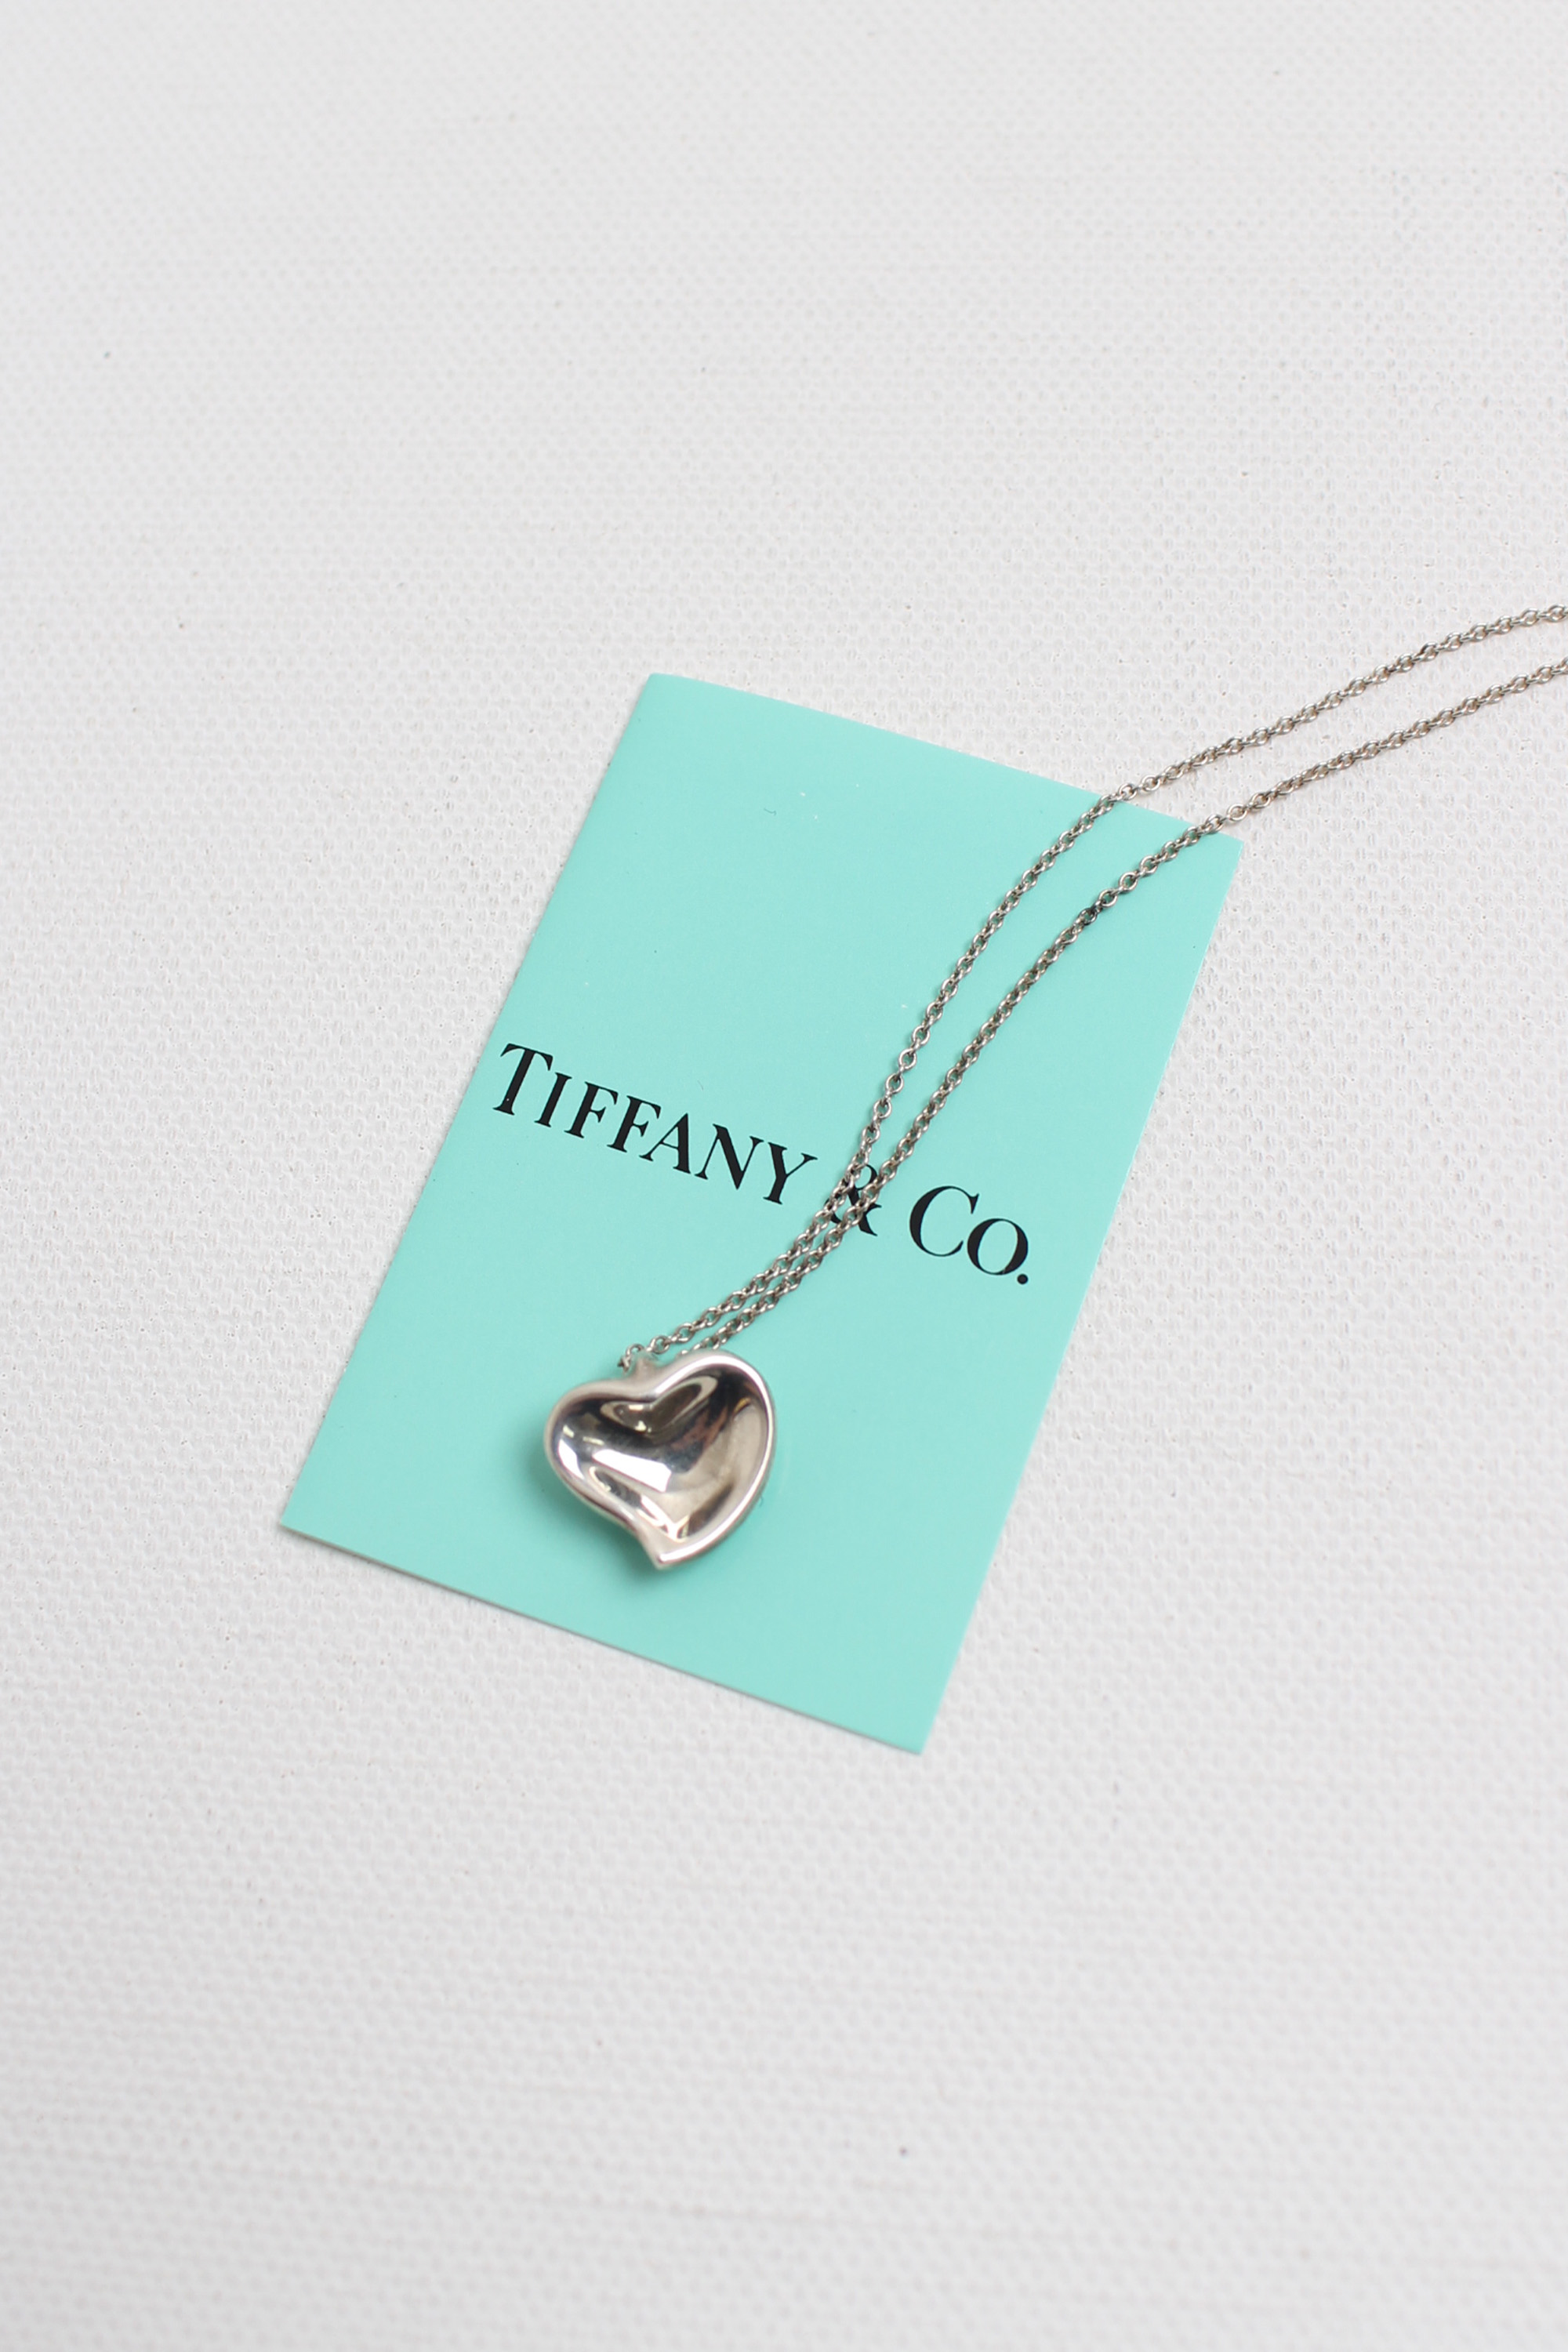 Tiffany&amp;Co necklace